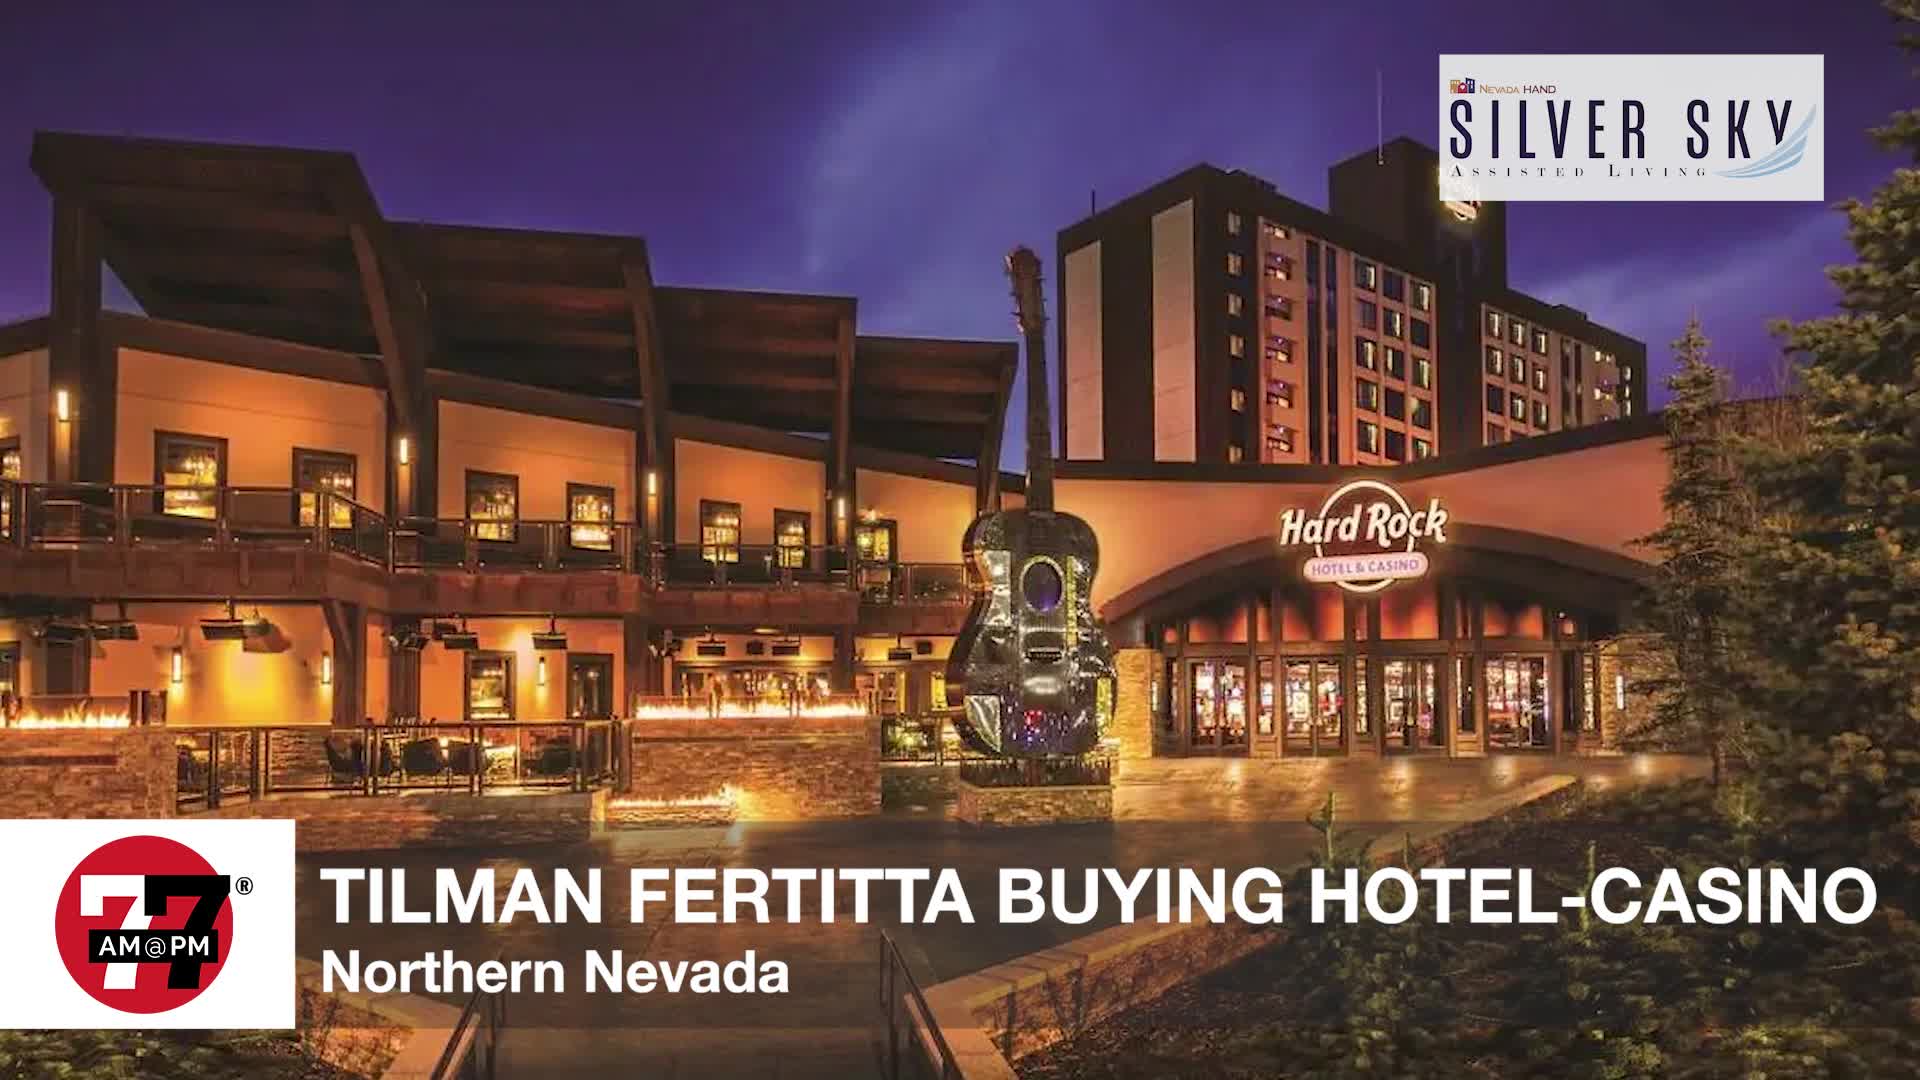 Fertitta buying hotel-casino in northern Nevada